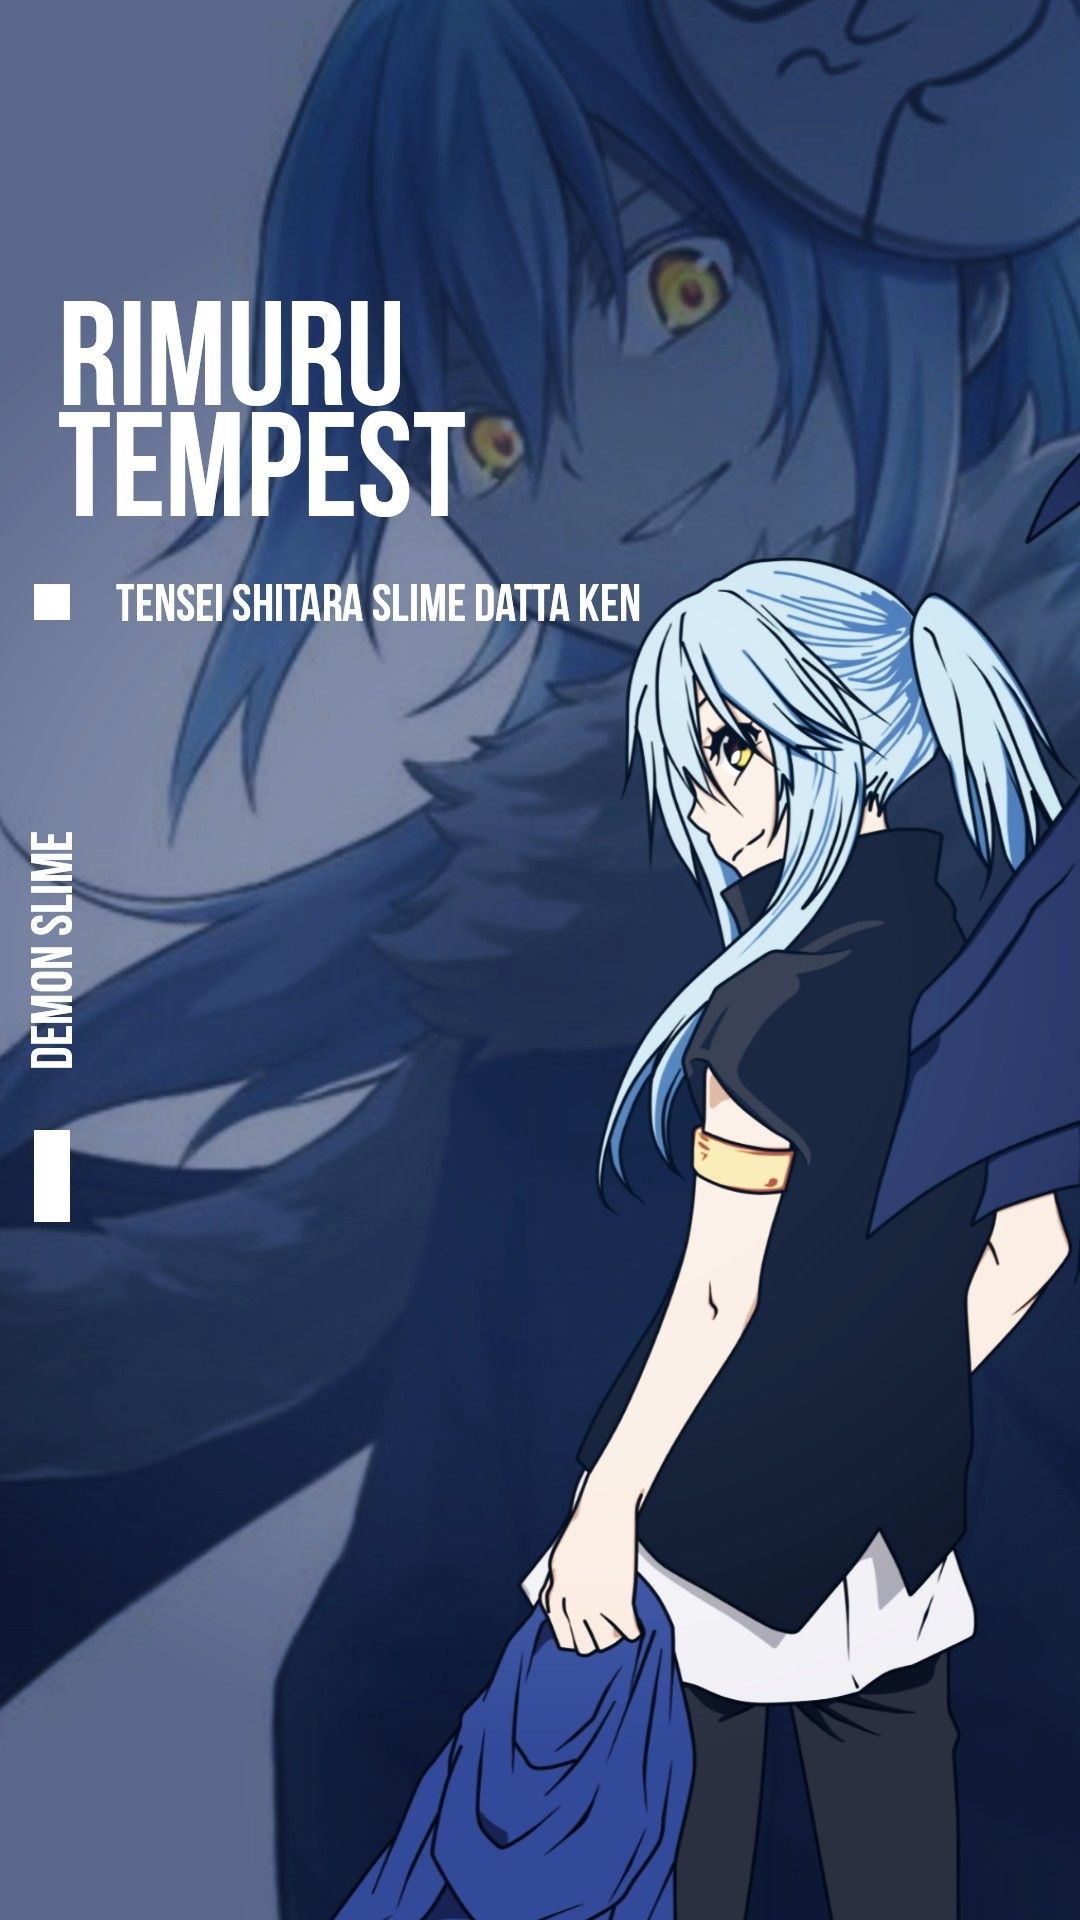 Rimuru Tempest Wallpaper di 2021. Gambar anime lucu, Gambar anime, Gambar tim